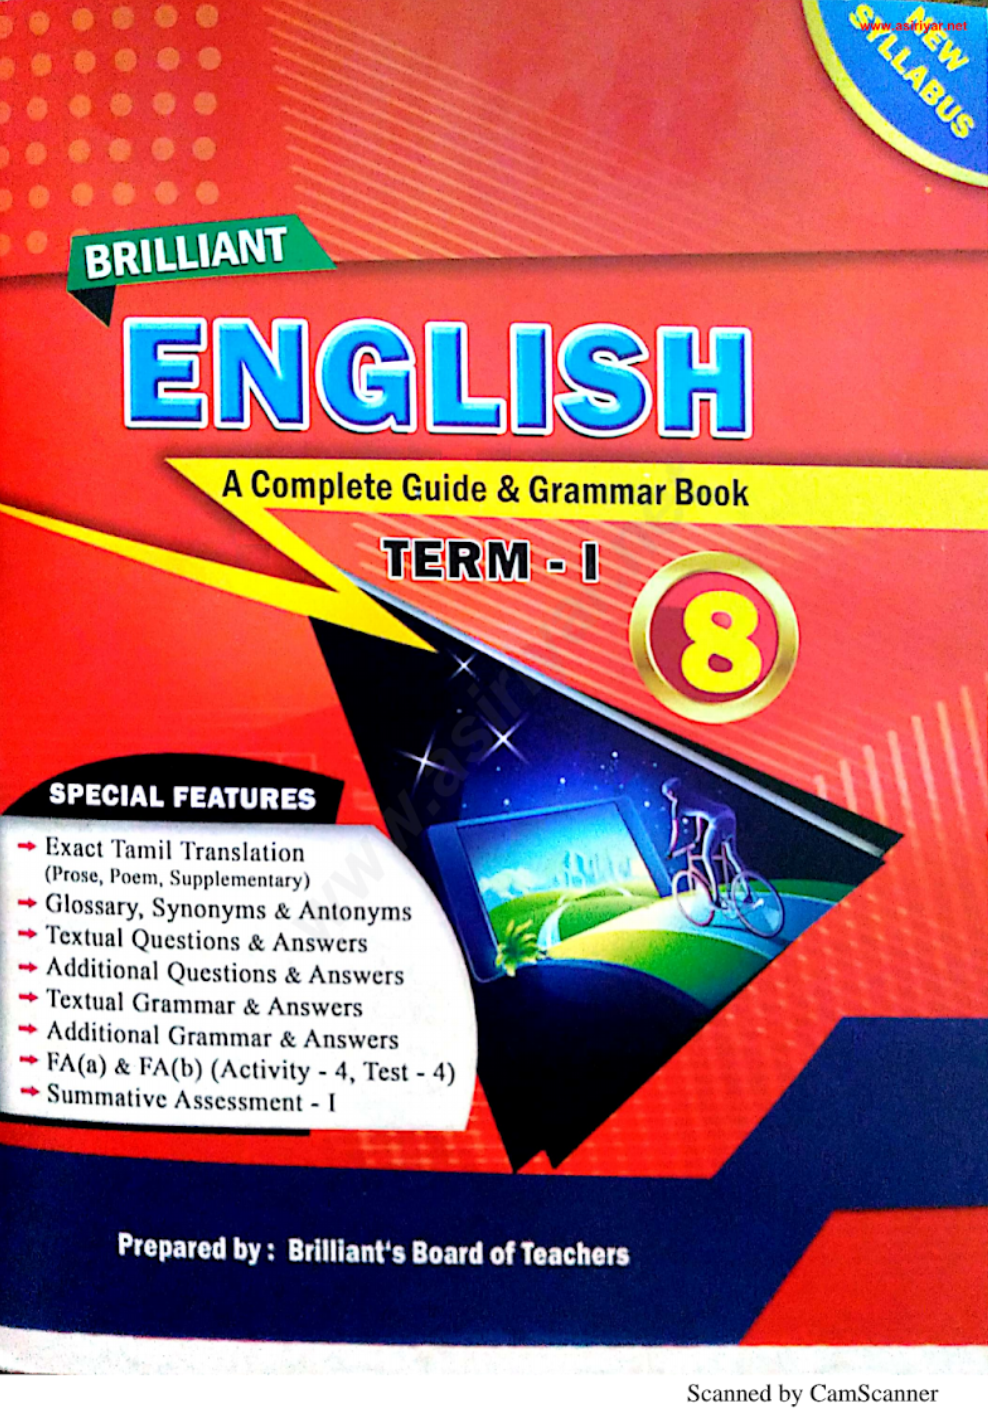 8th-standard-term-1-english-guide-brilliant-english-medium-download-tnkalvi